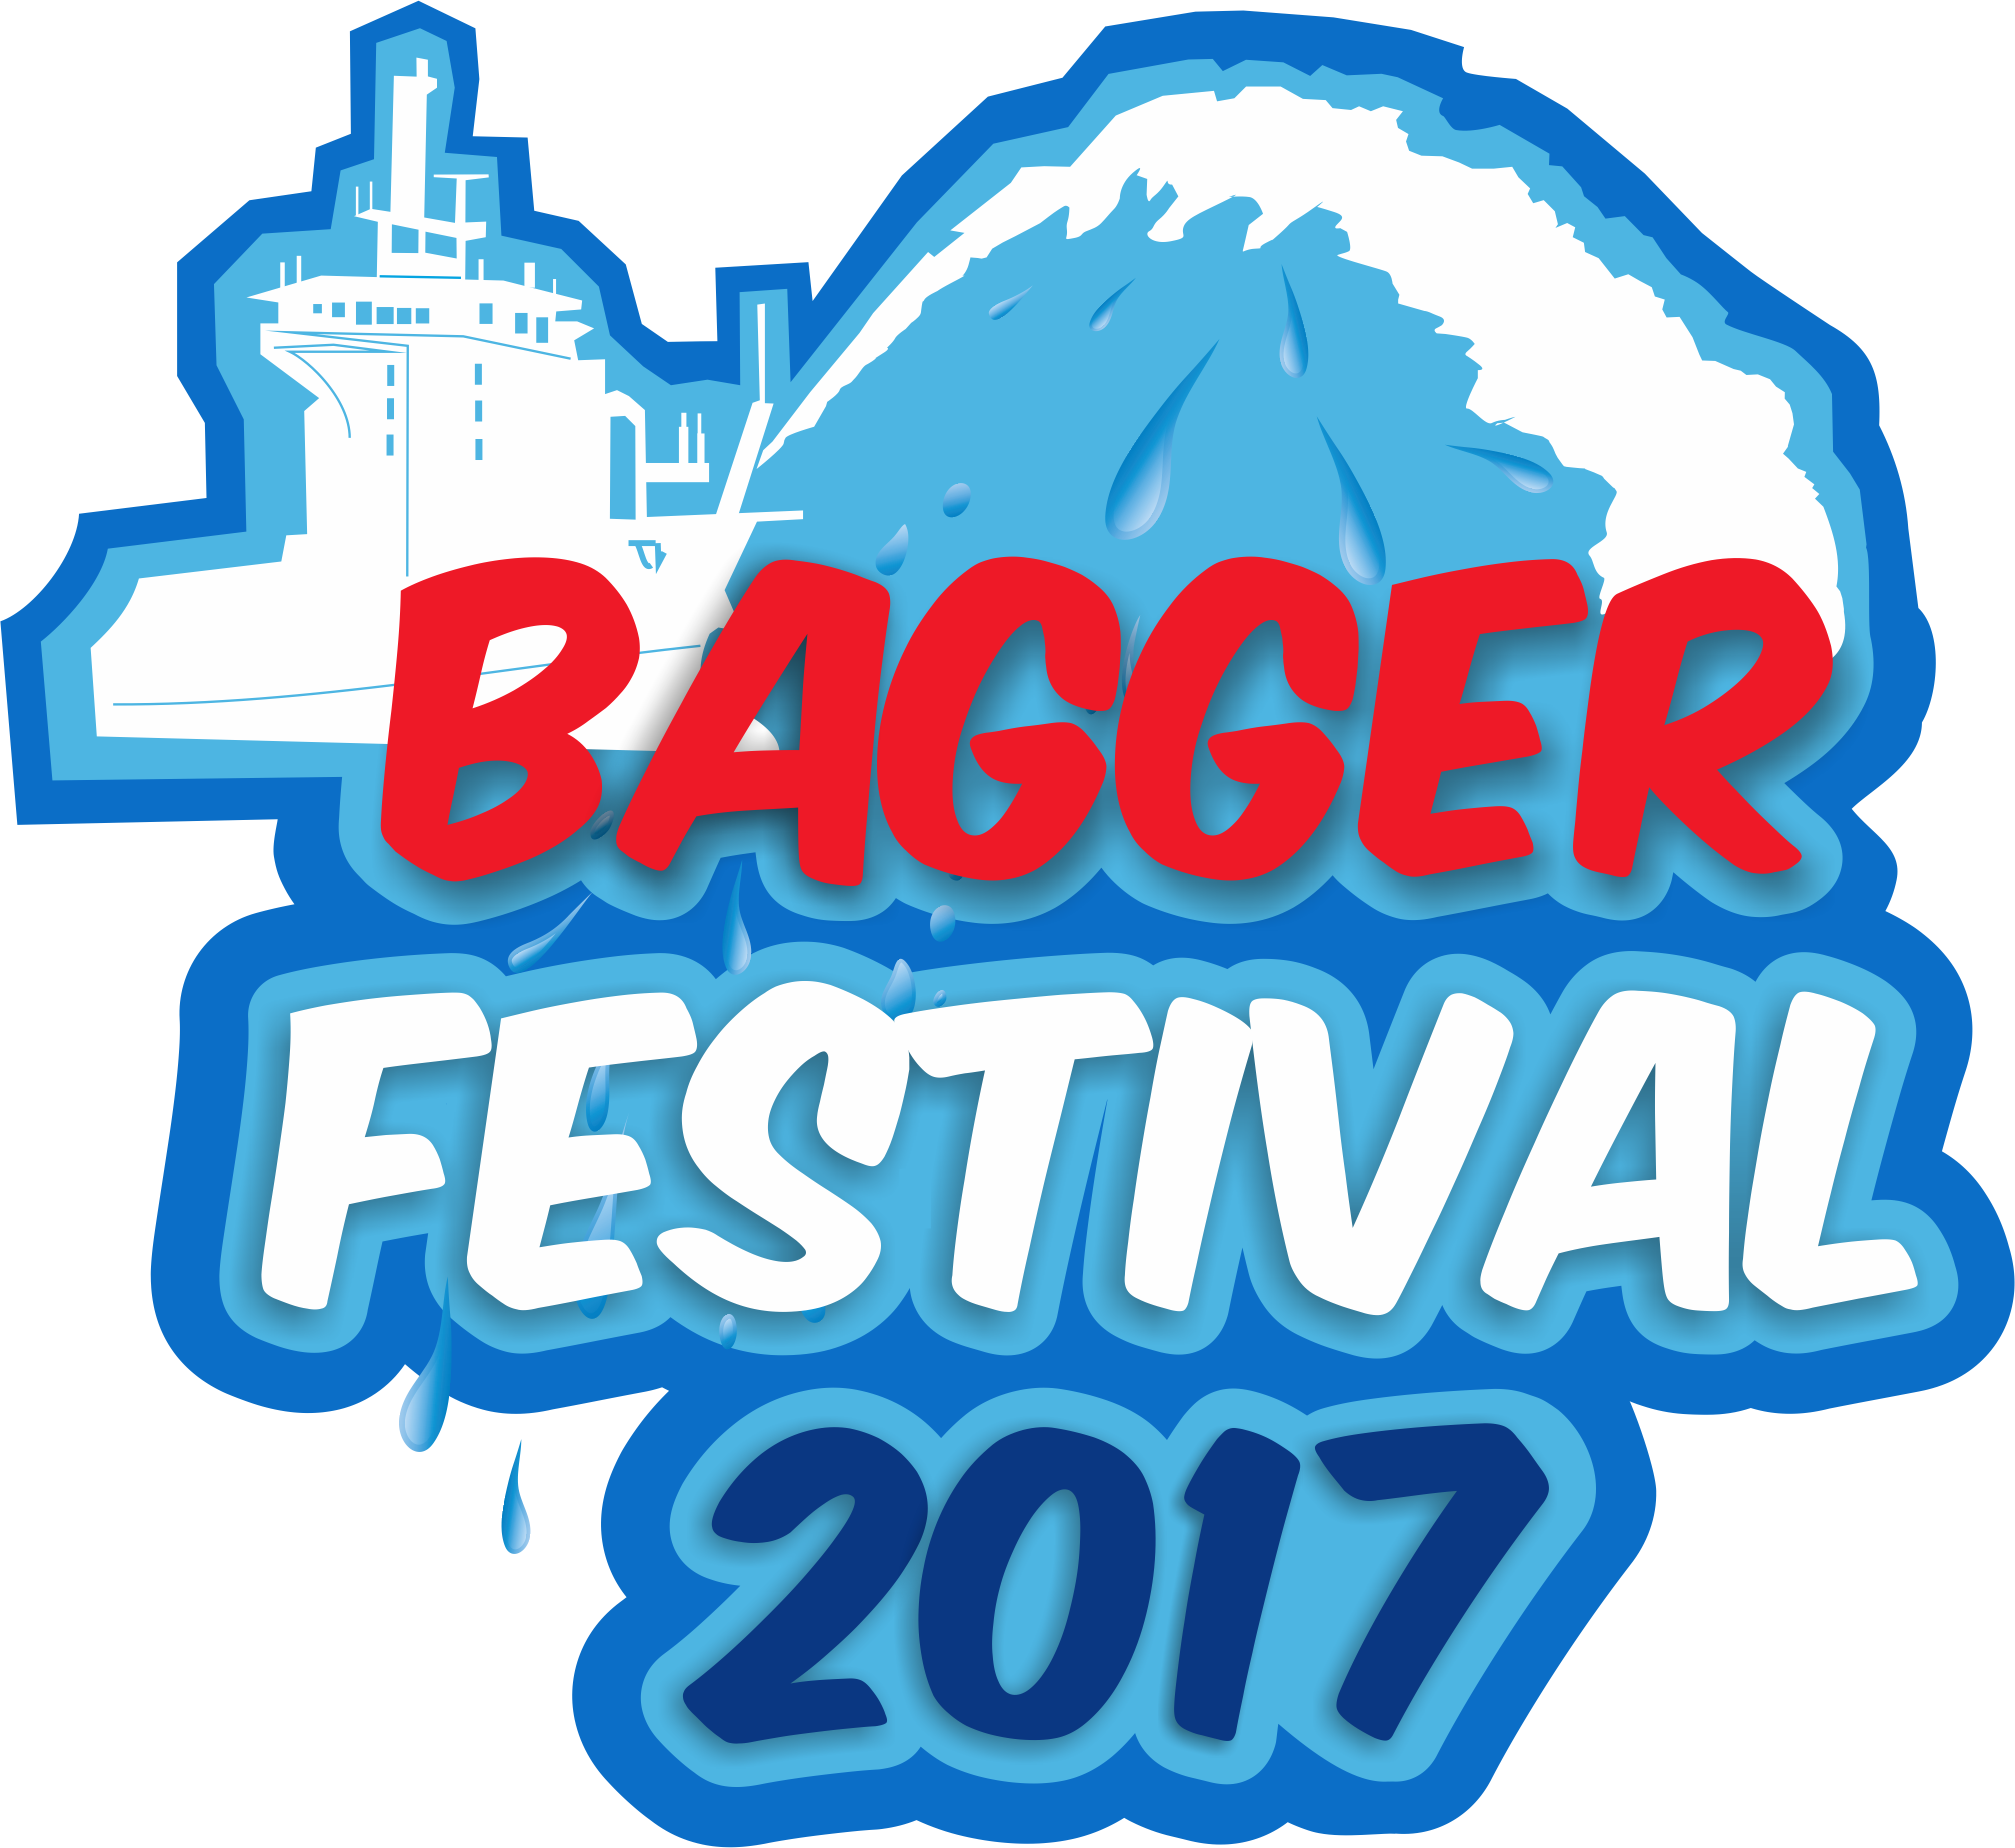 Baggerfestival 2017